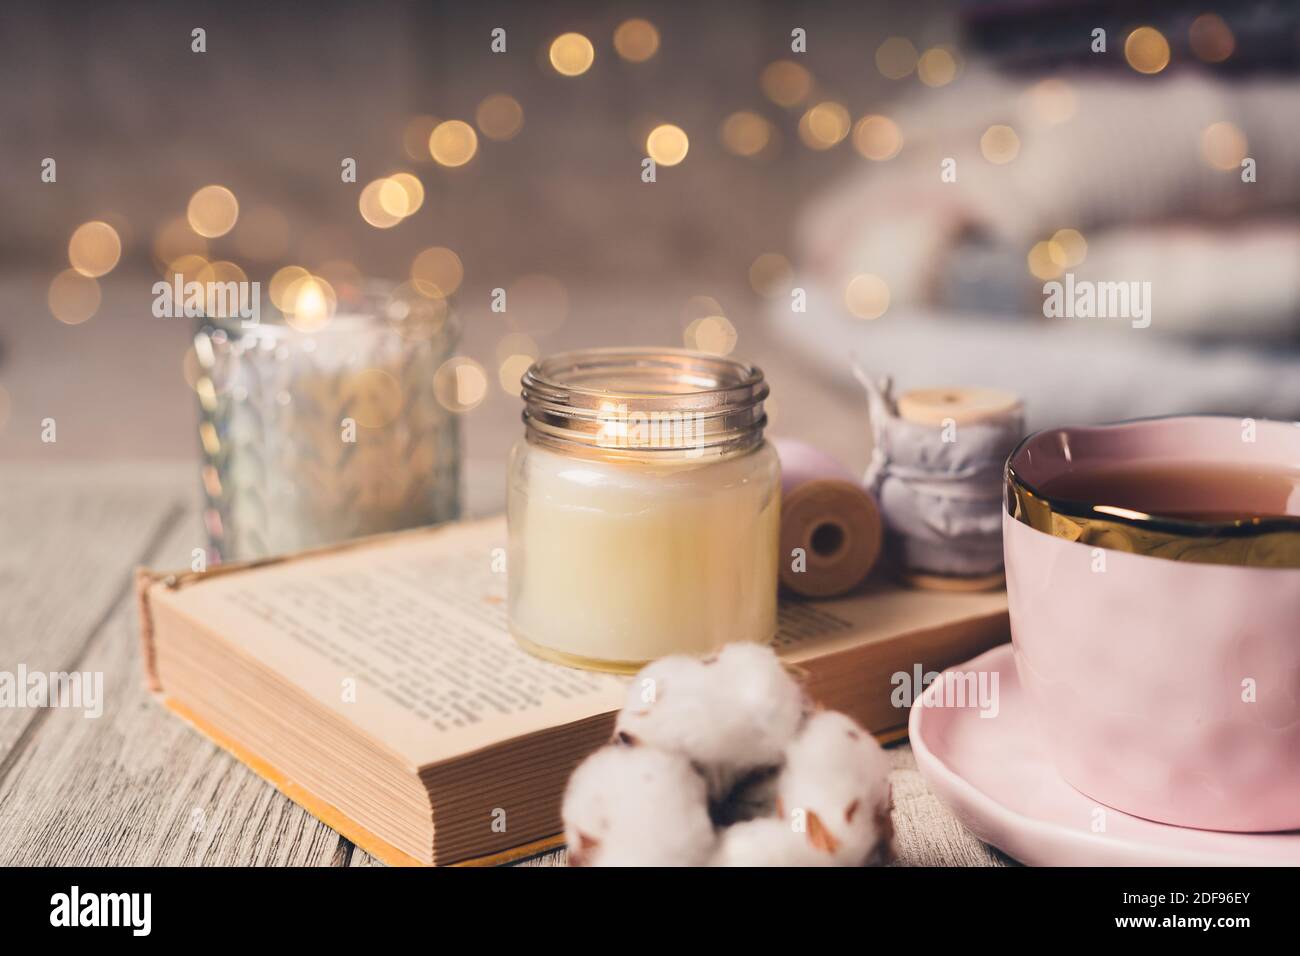 Cup of Tea, Cotton, Cozy, Book, Candle. Cosy Autumn Winter Concept